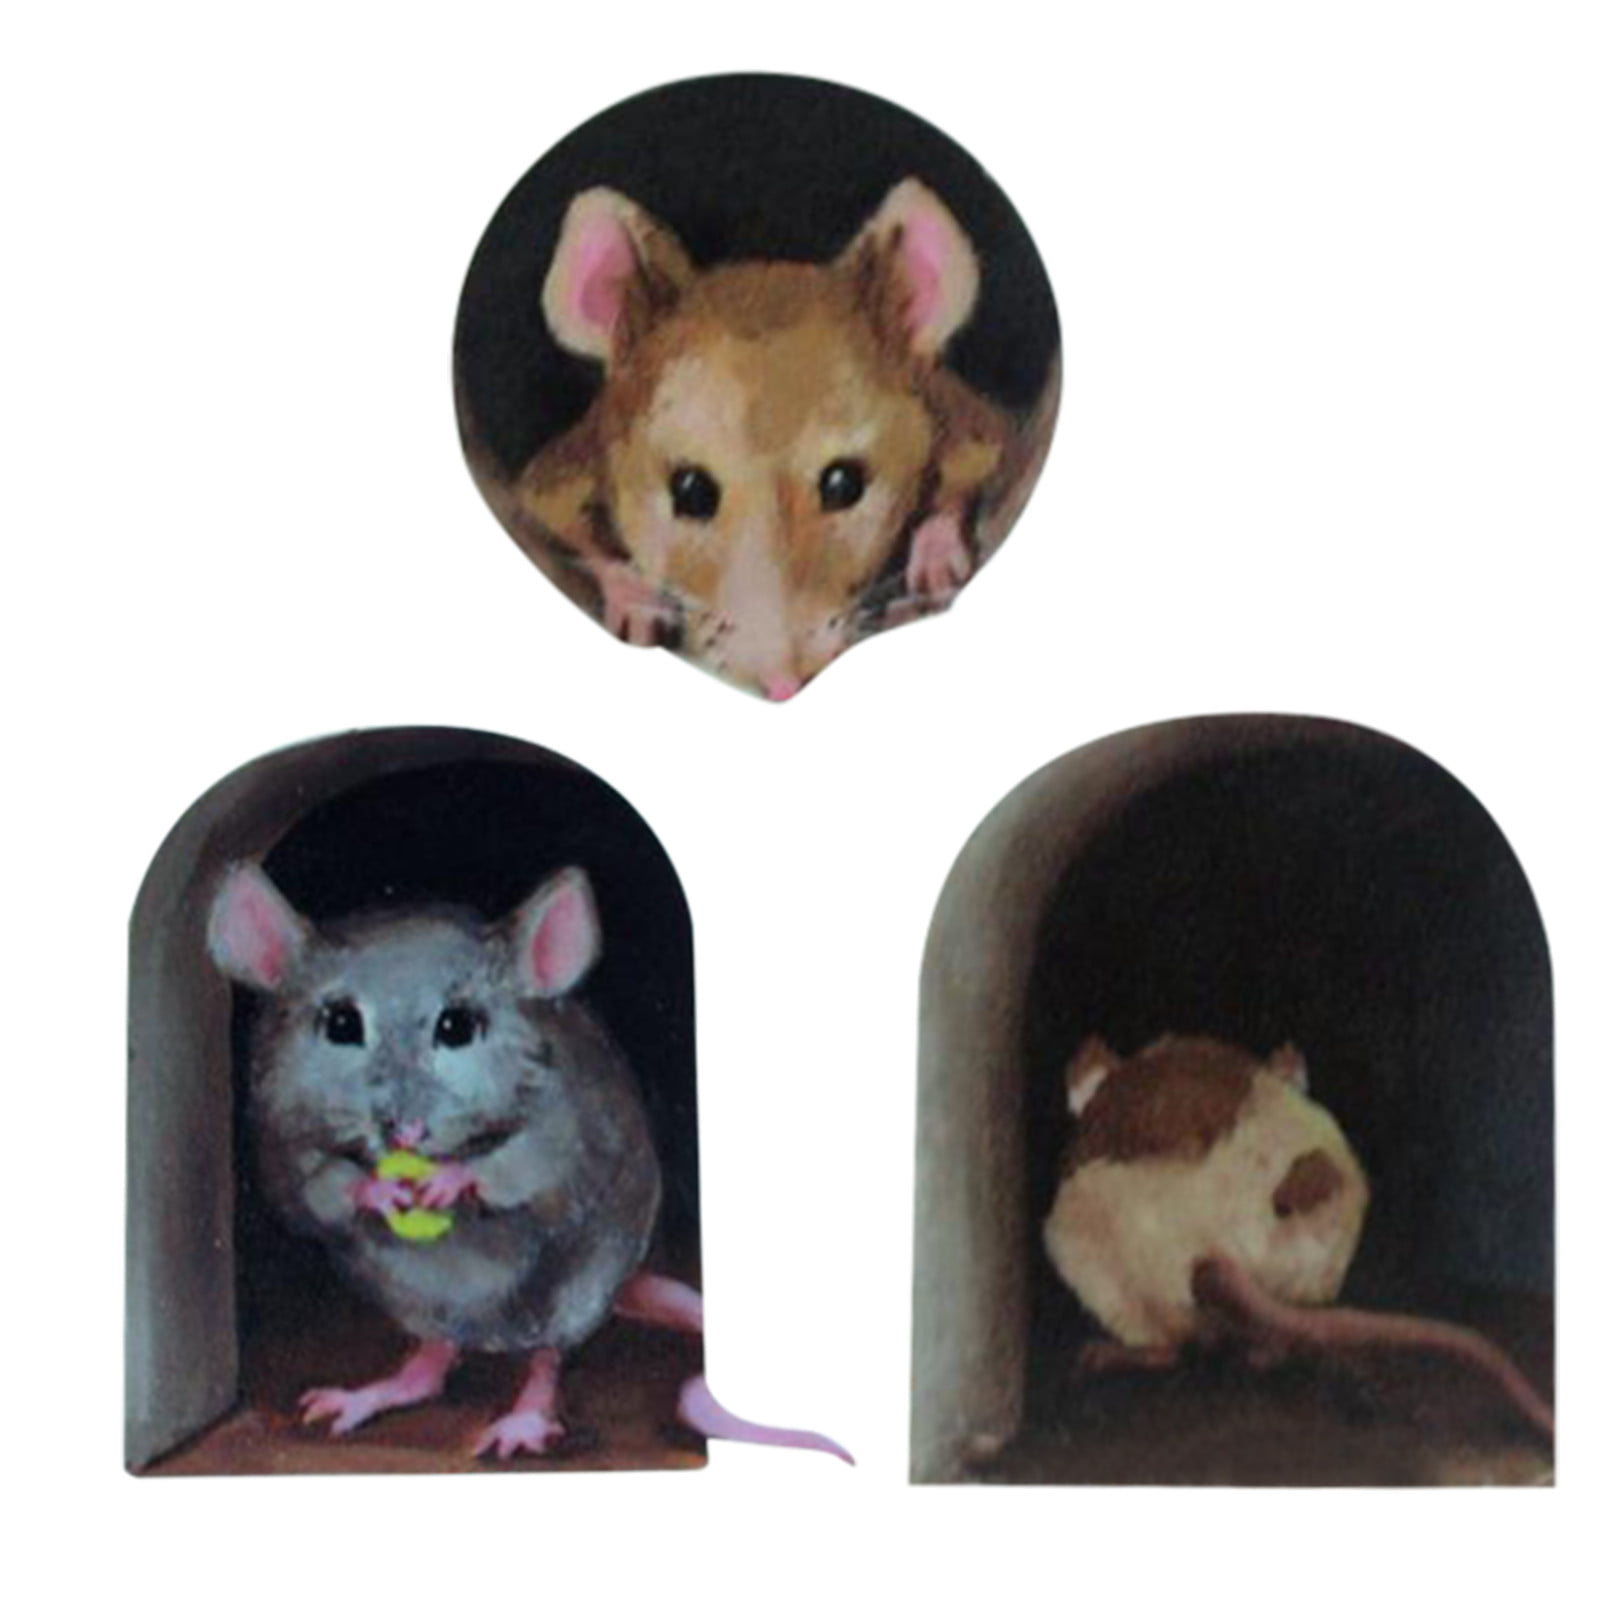 The Gruffalo Mouse Self Adhesive Wall Art Sticker Print Mural Multi Sizes New* 